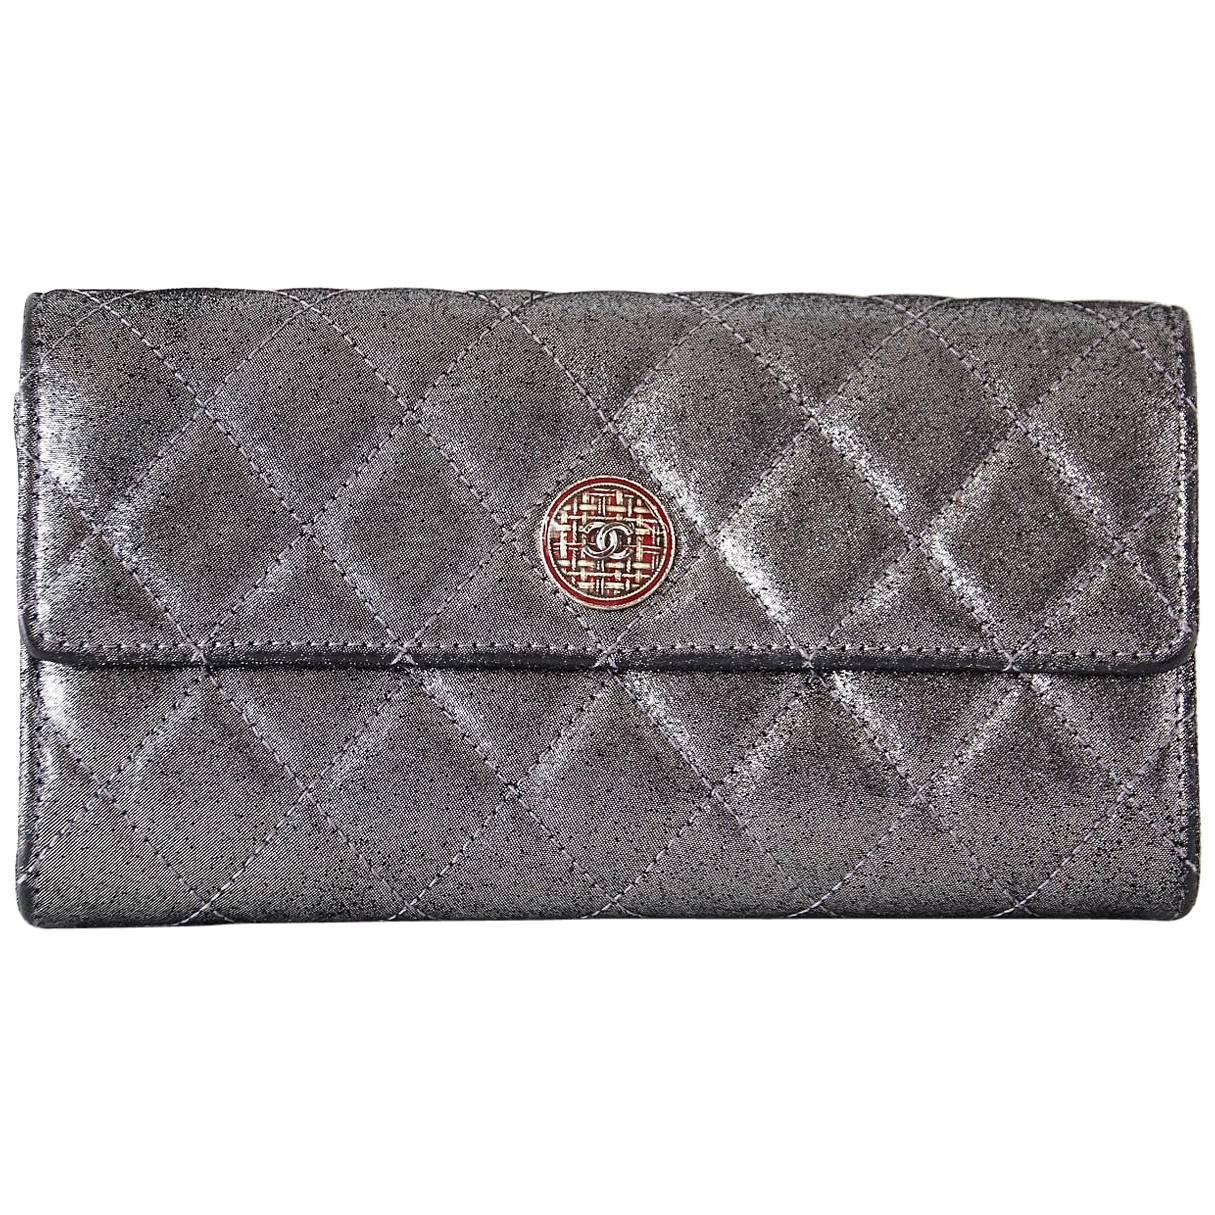 Chanel Wallet Metallic Silver Quilted Leather Paris-Edinburgh